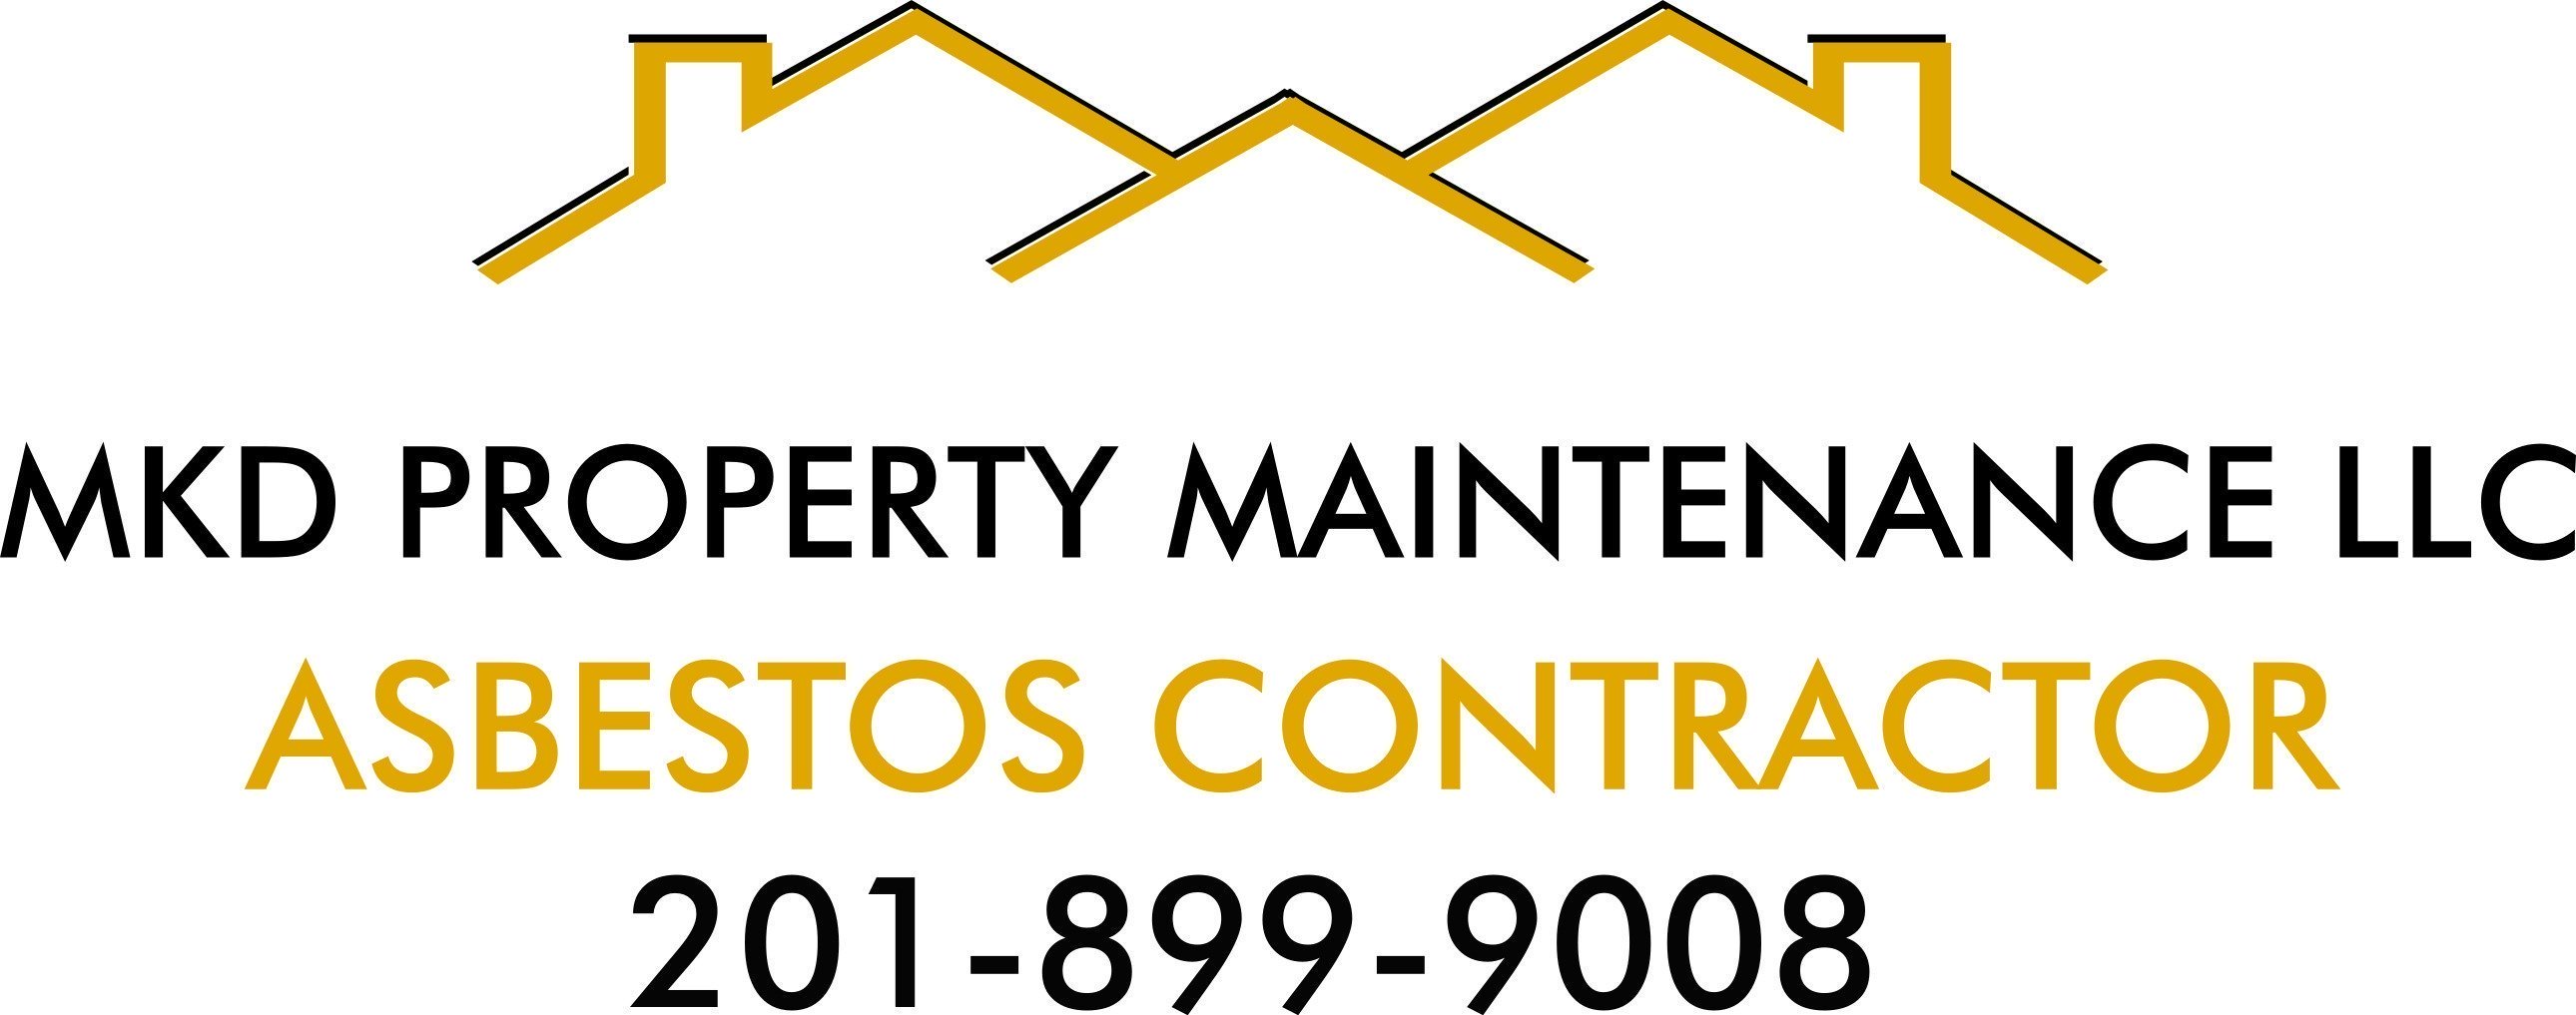 MKD Property Maintenance LLC.